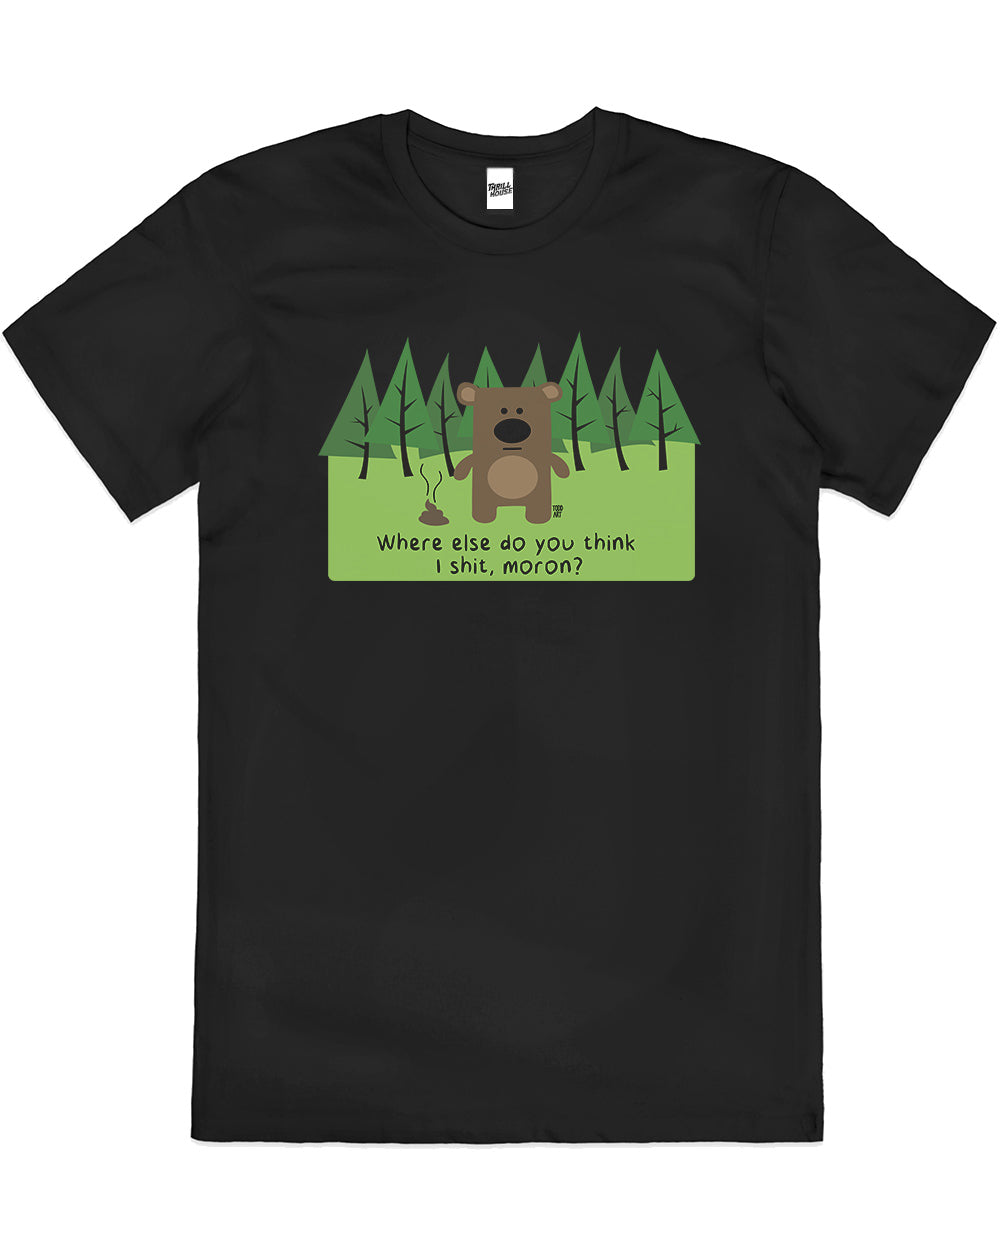 Bear Shit Woods Funny Rude Slogan Saying Cute Novelty Cotton T-Shirt